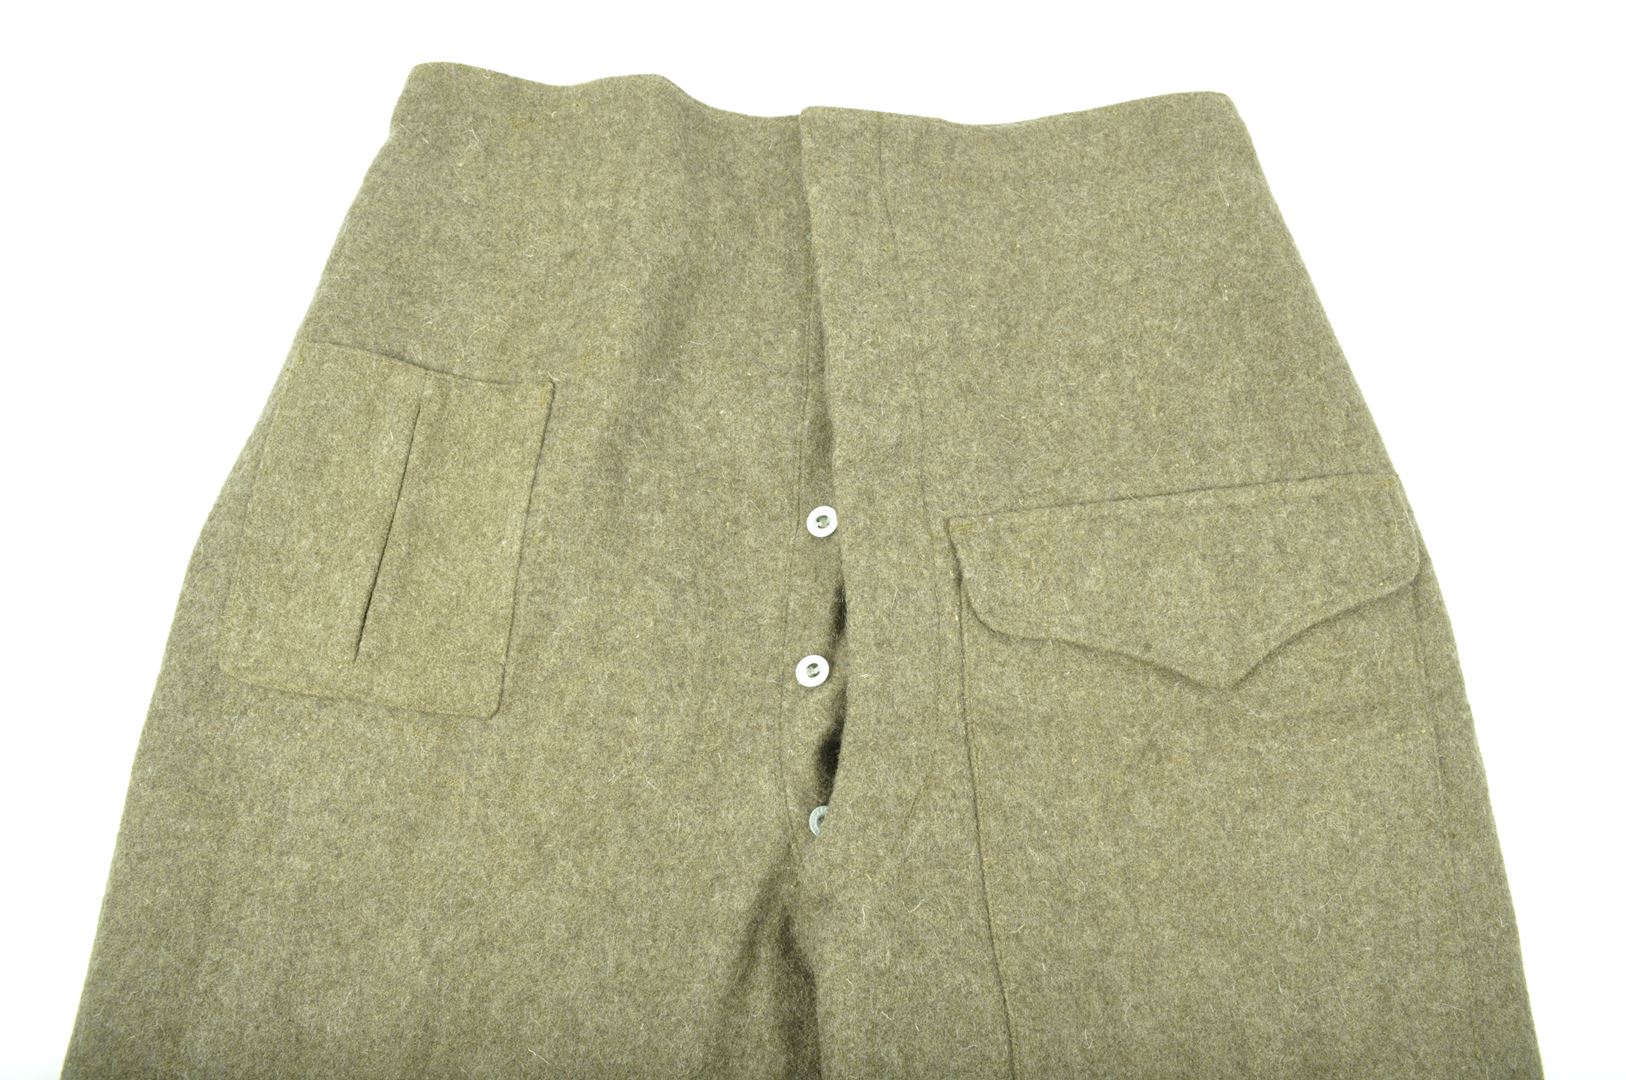 Pantalon modèle 44 daté Mars 1945